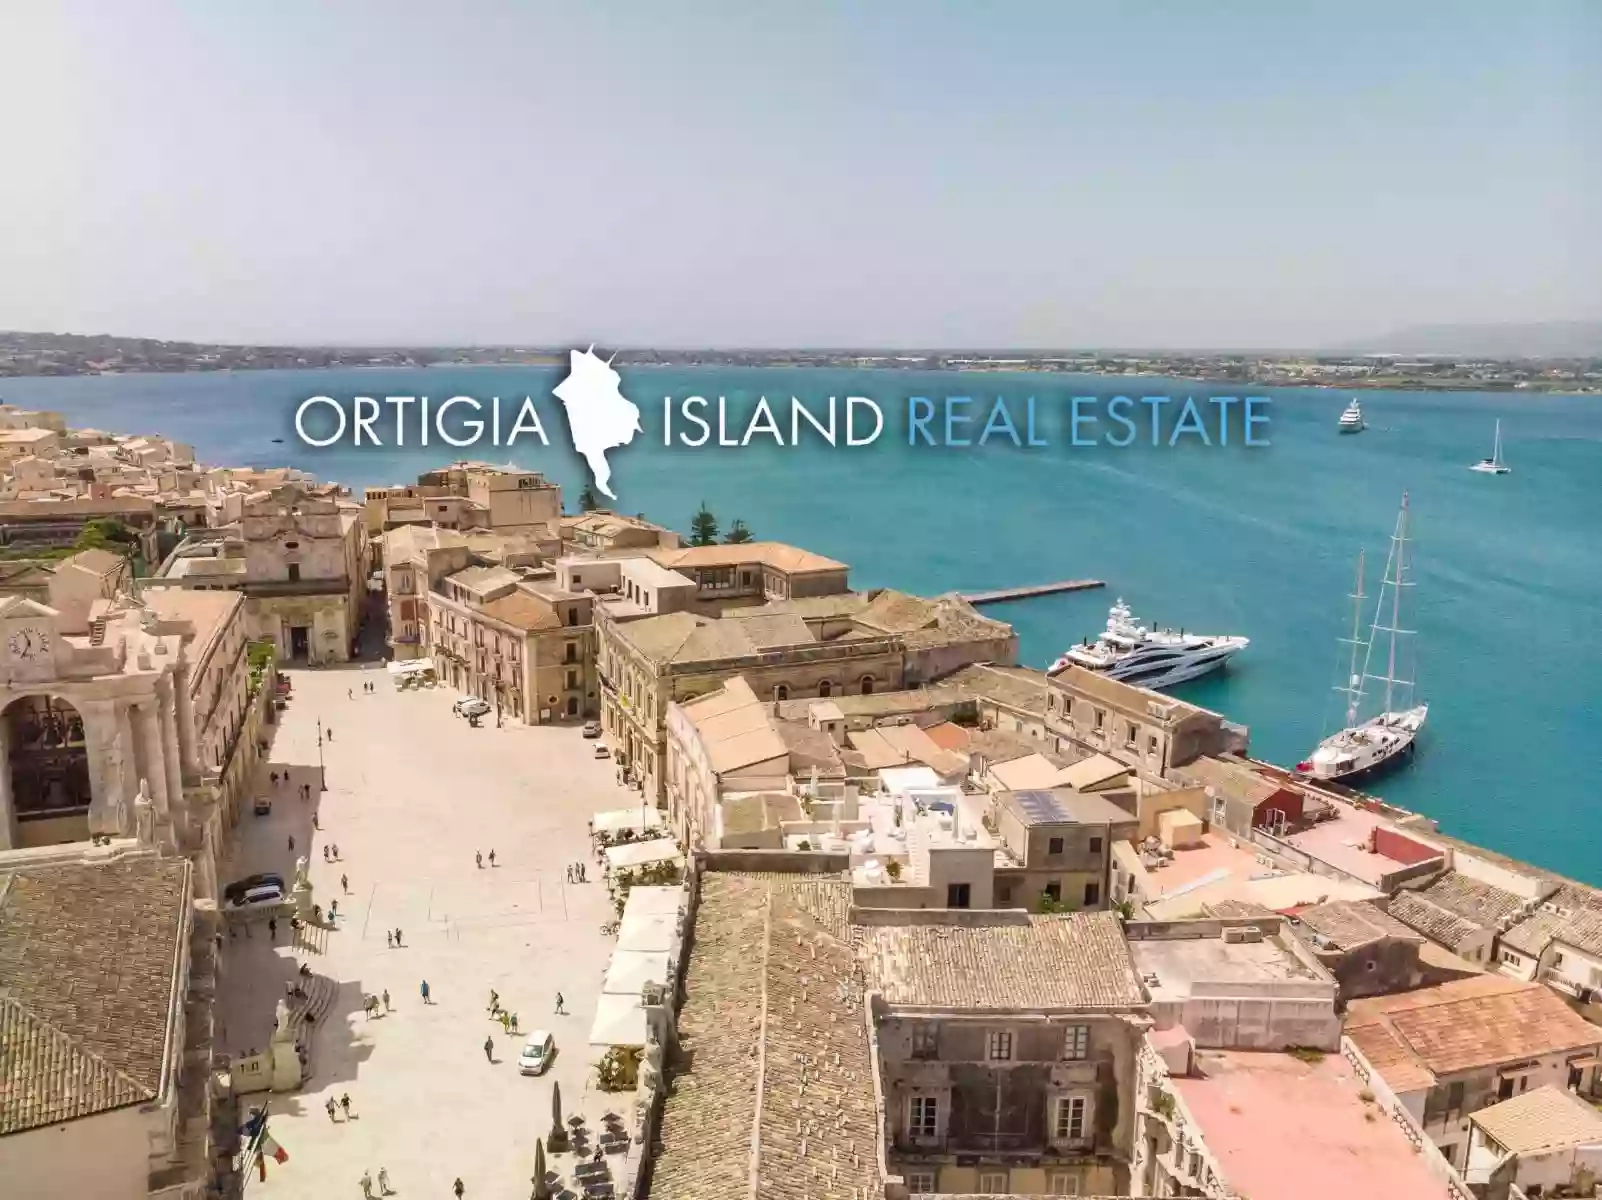 Ortigia Island Real Estate - Siracusa